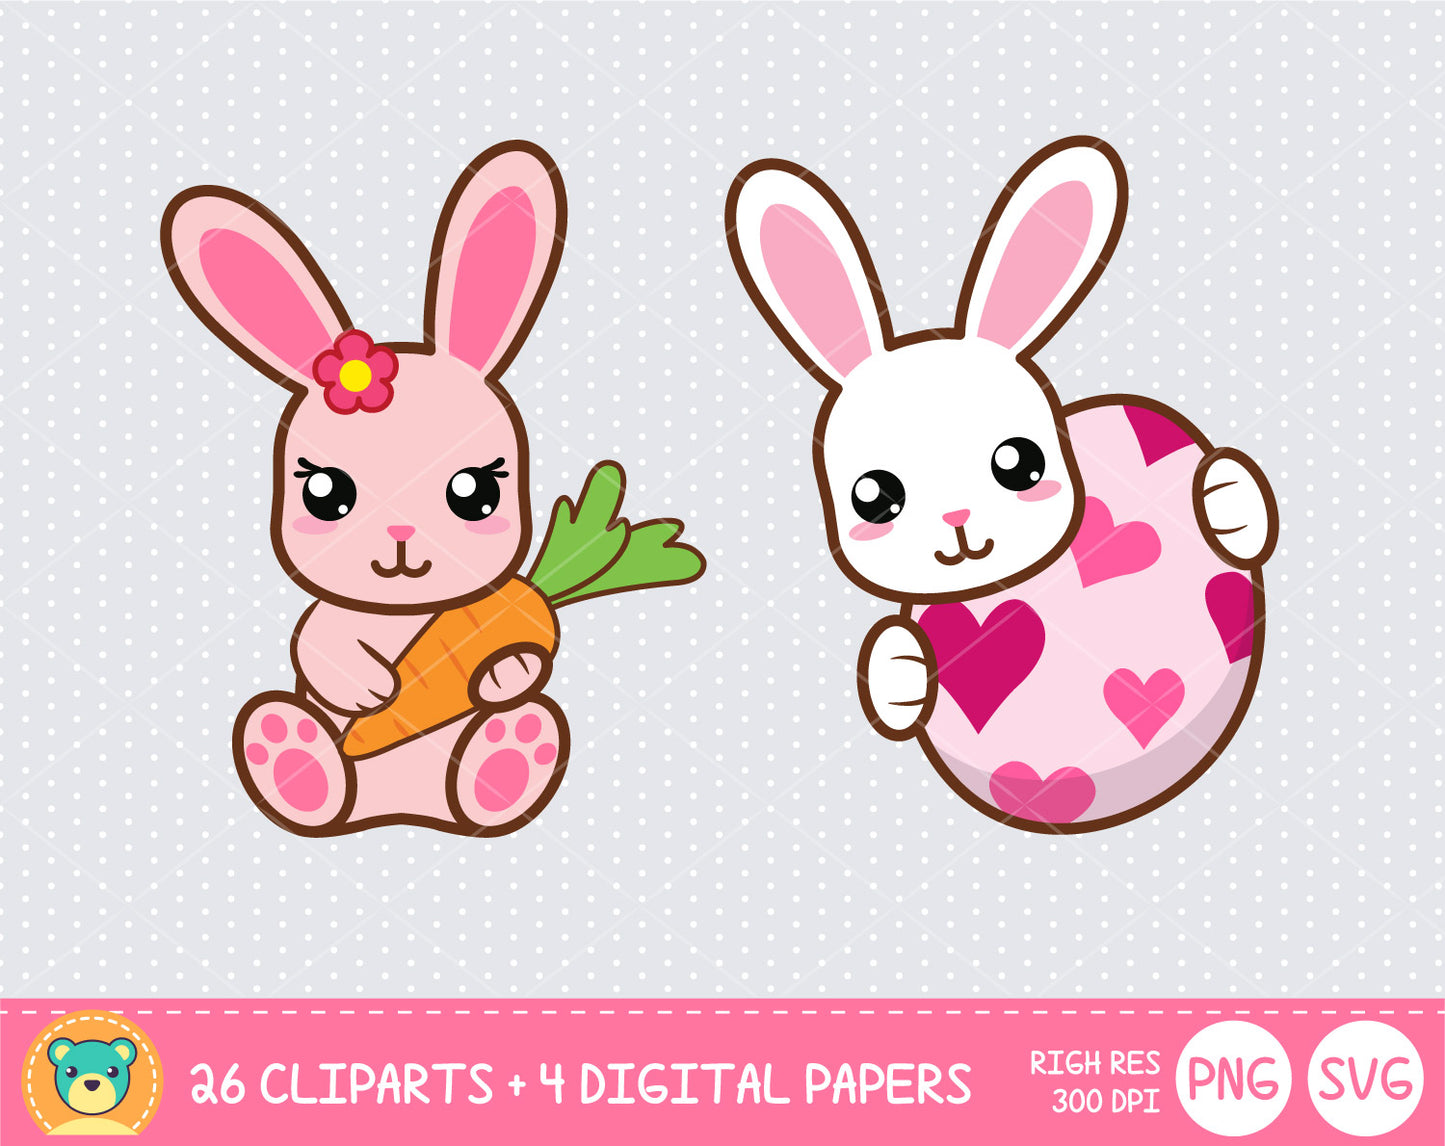 Cute Easter Bunny clipart set, Digital clip art for decoration, scrapbooking, PNG, SVG, instant download